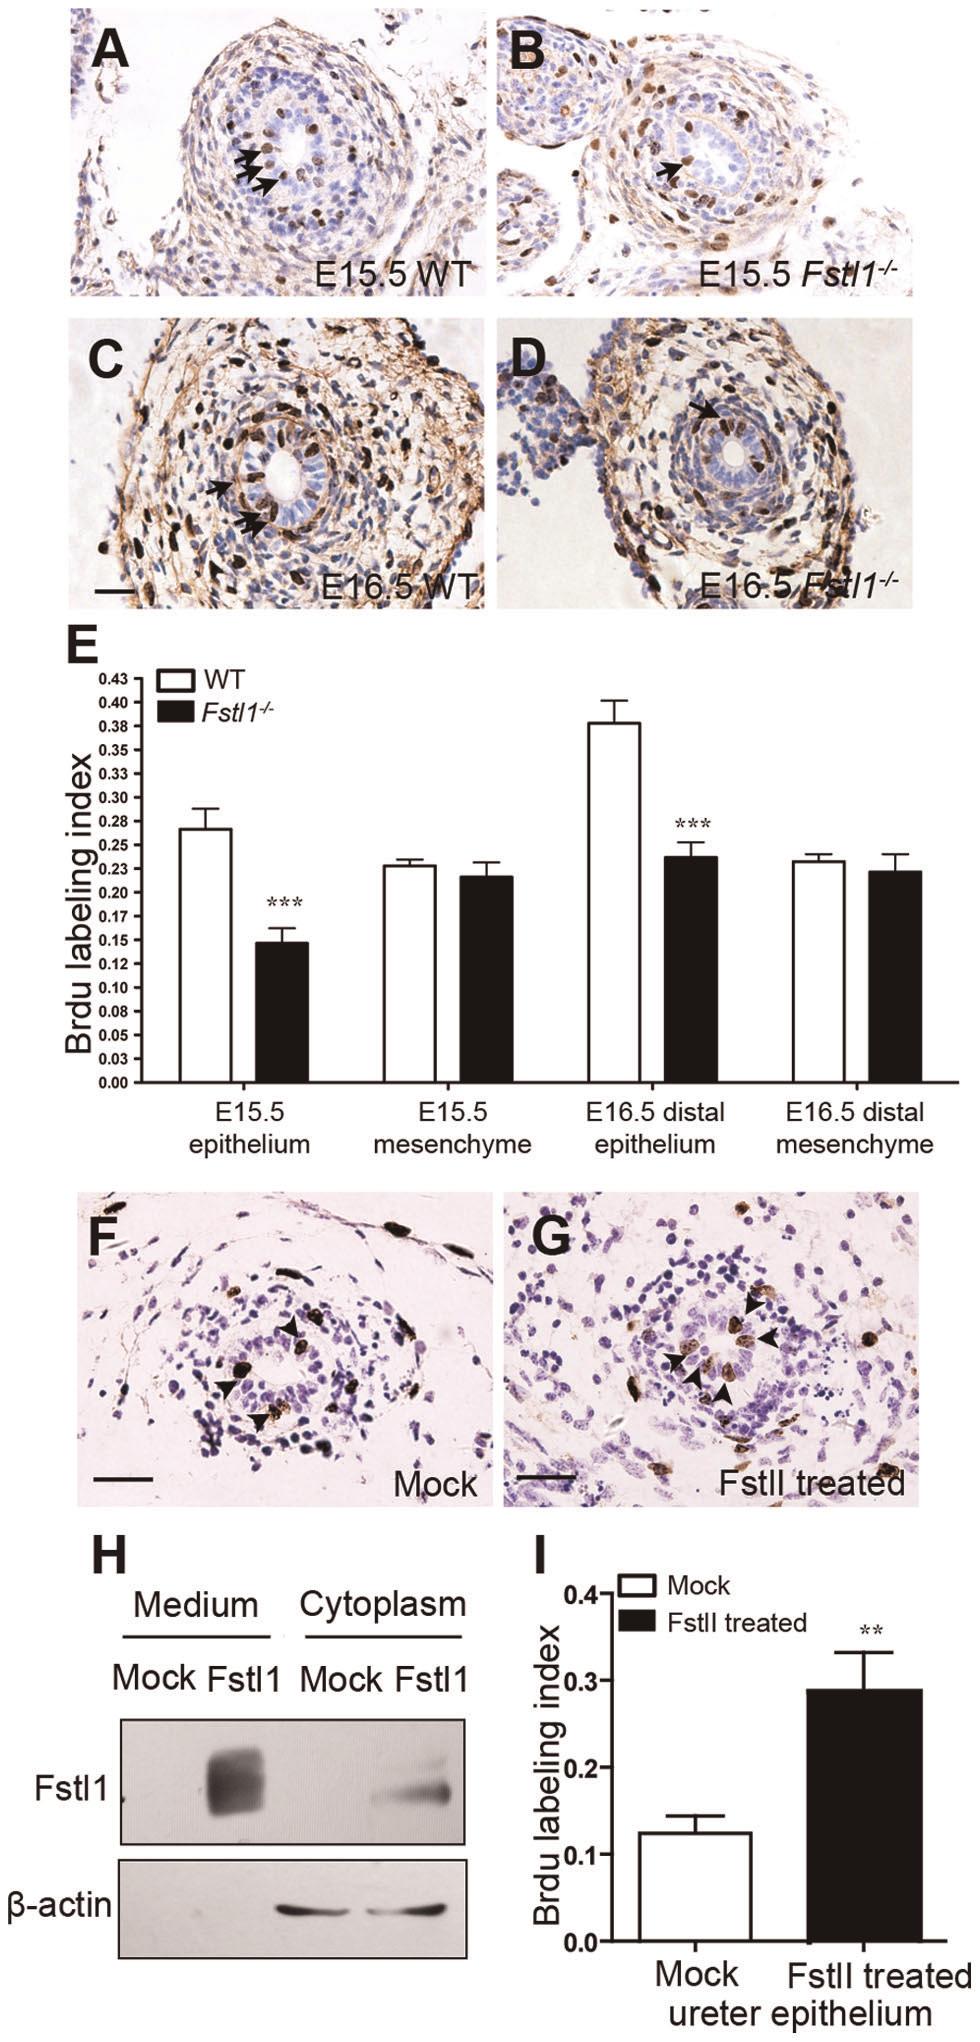 Figure 4. Proliferation defects in Fstl1 -/- ureteric epithelial cells.